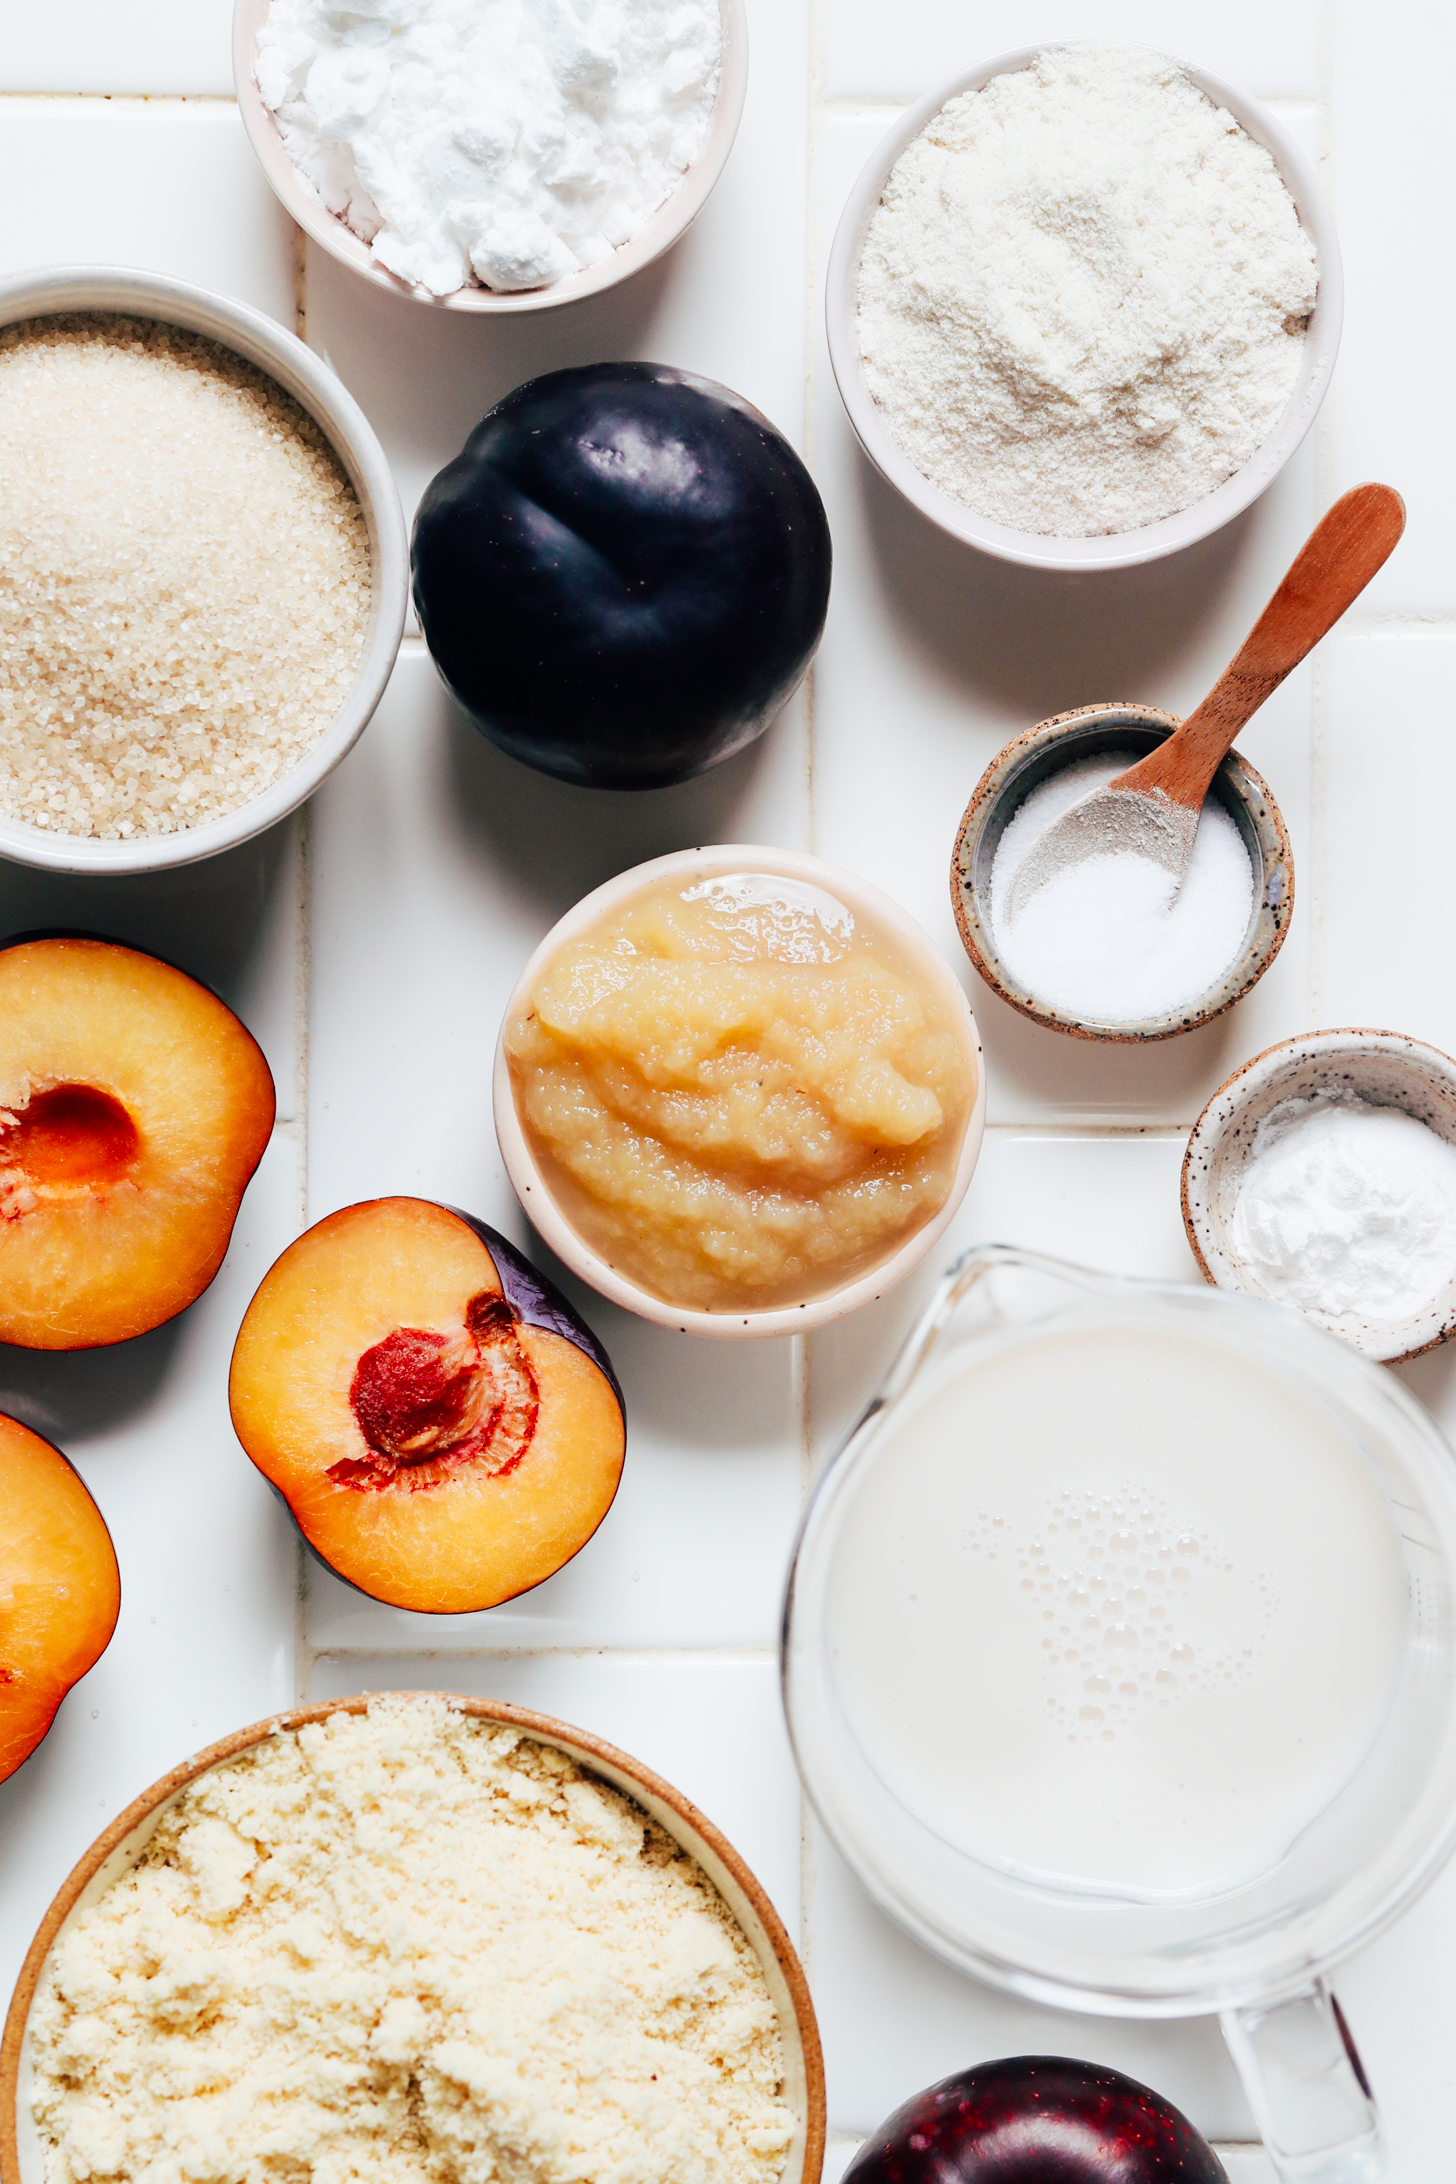 Plums, cane sugar, gluten-free flours, applesauce, salt, baking powder, and almond flour